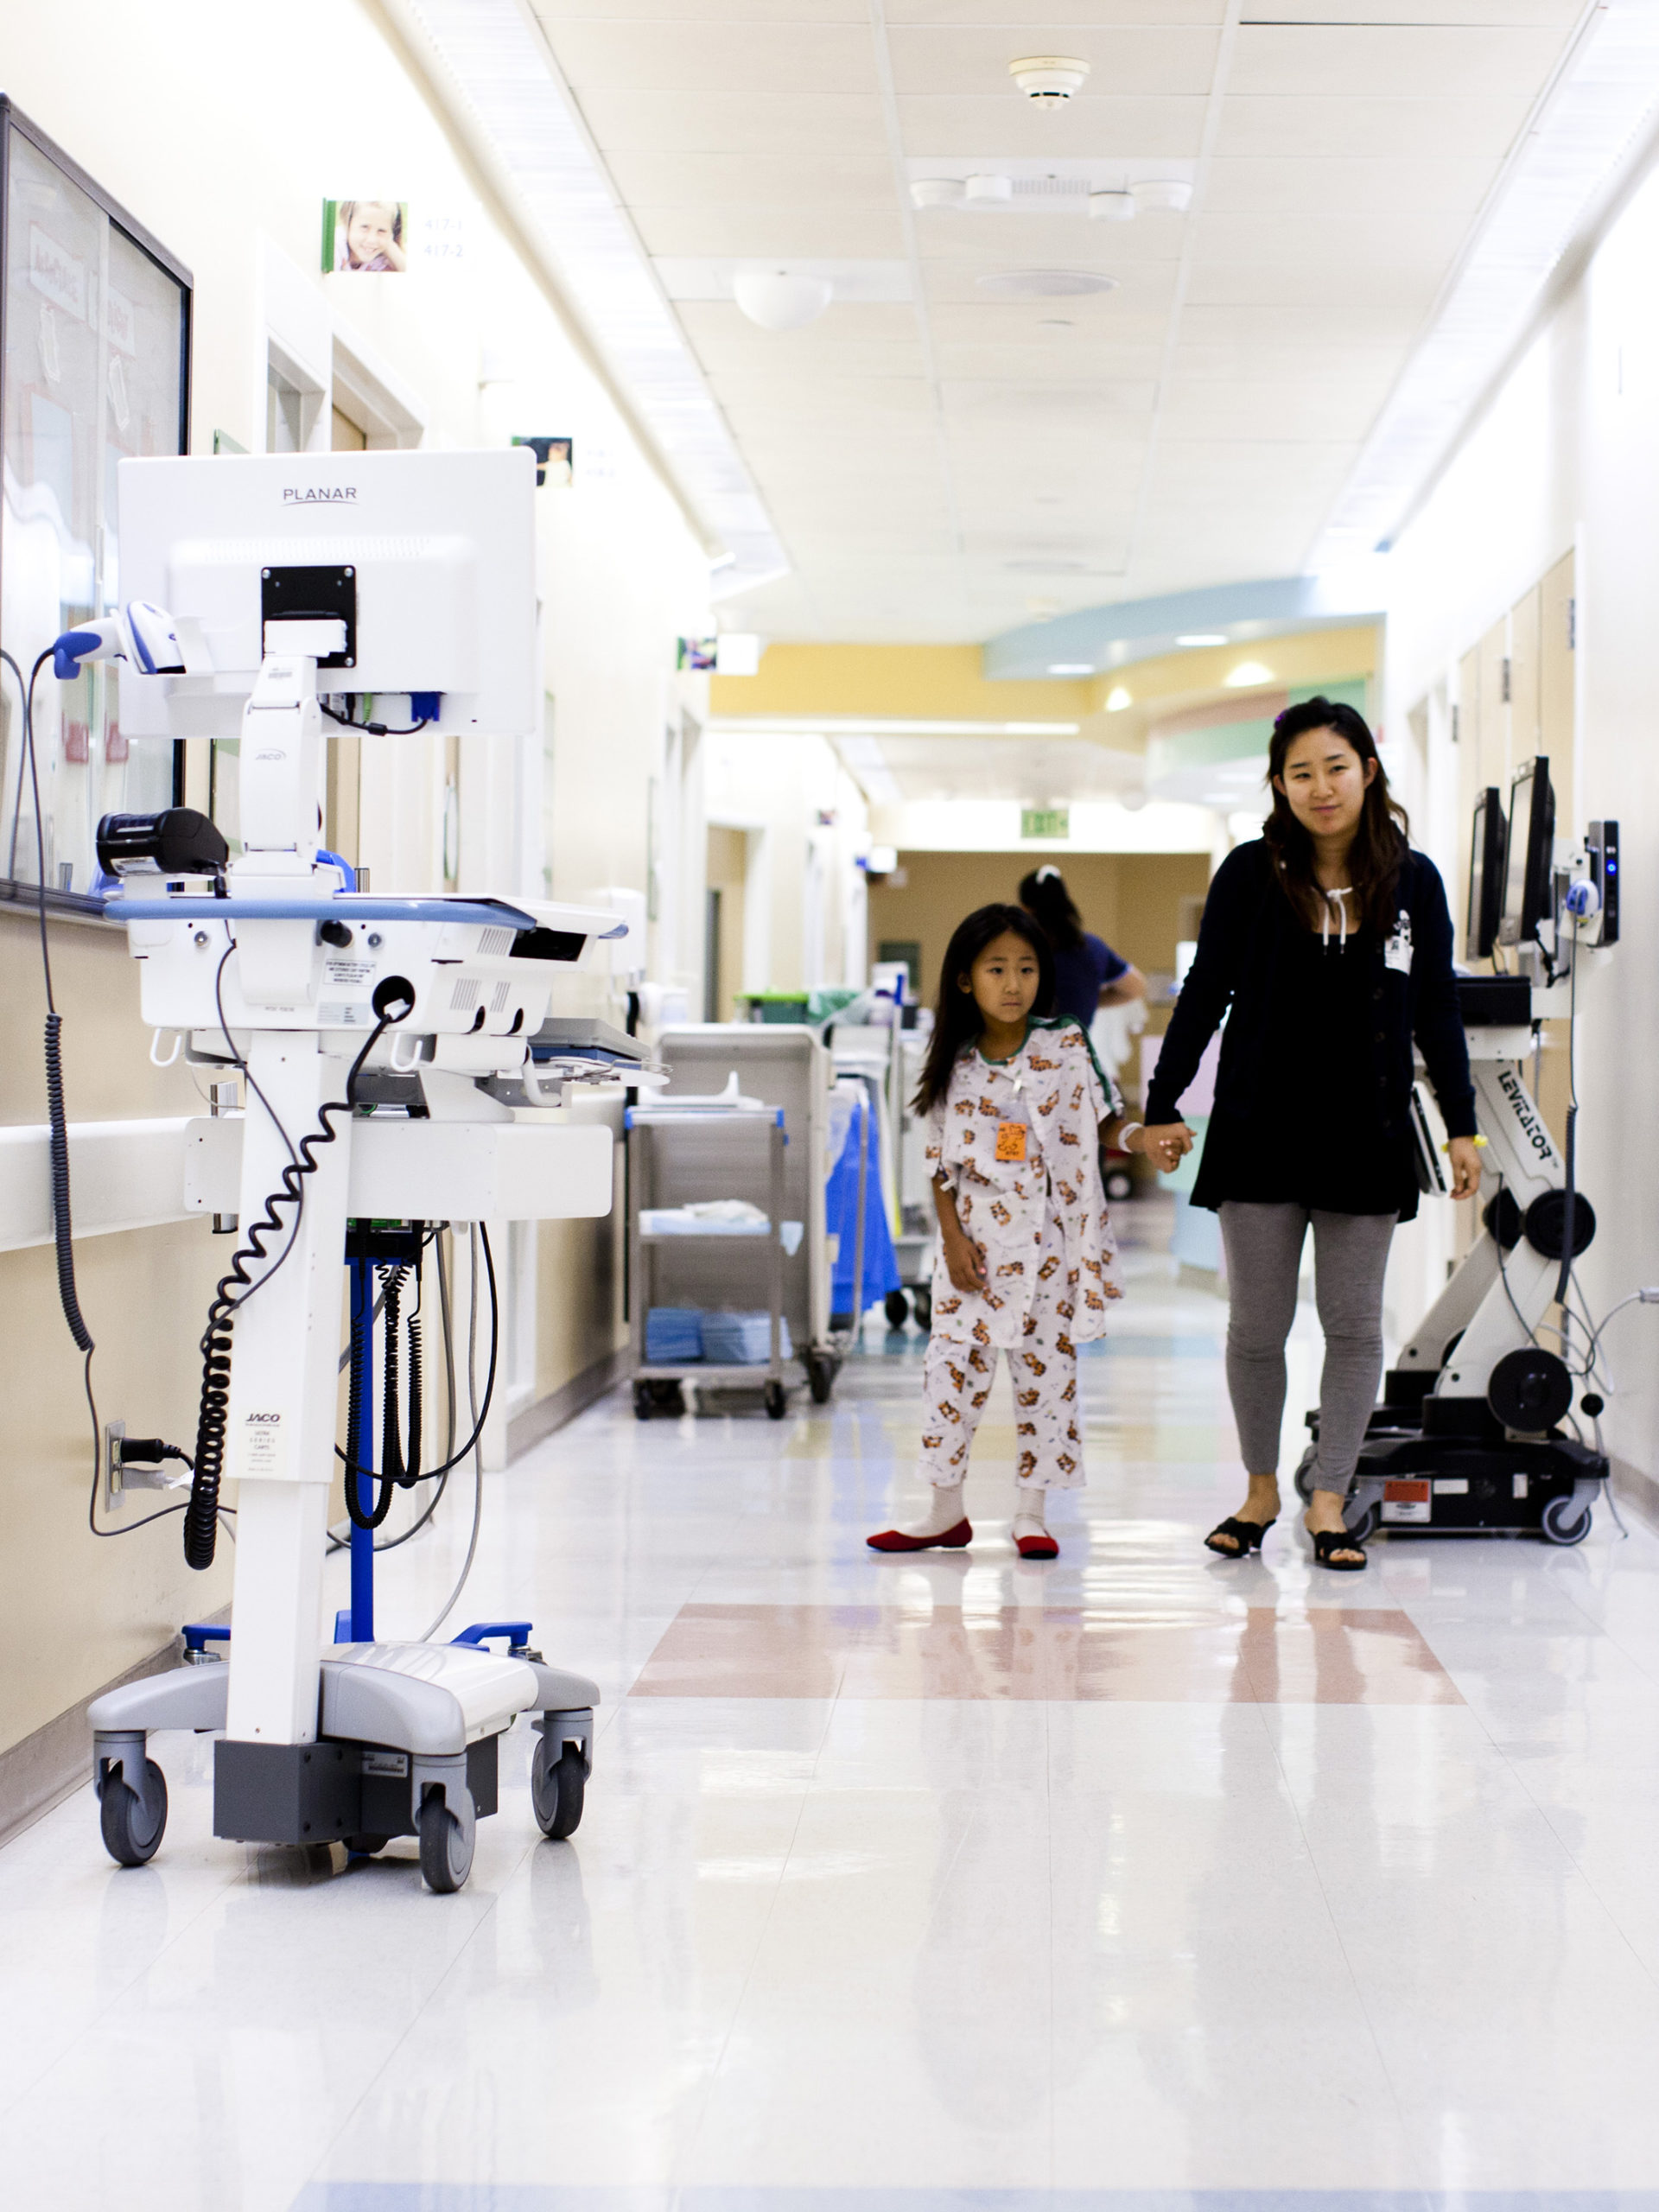 CHOC patient and mom walking through hallways at CHOC hospital